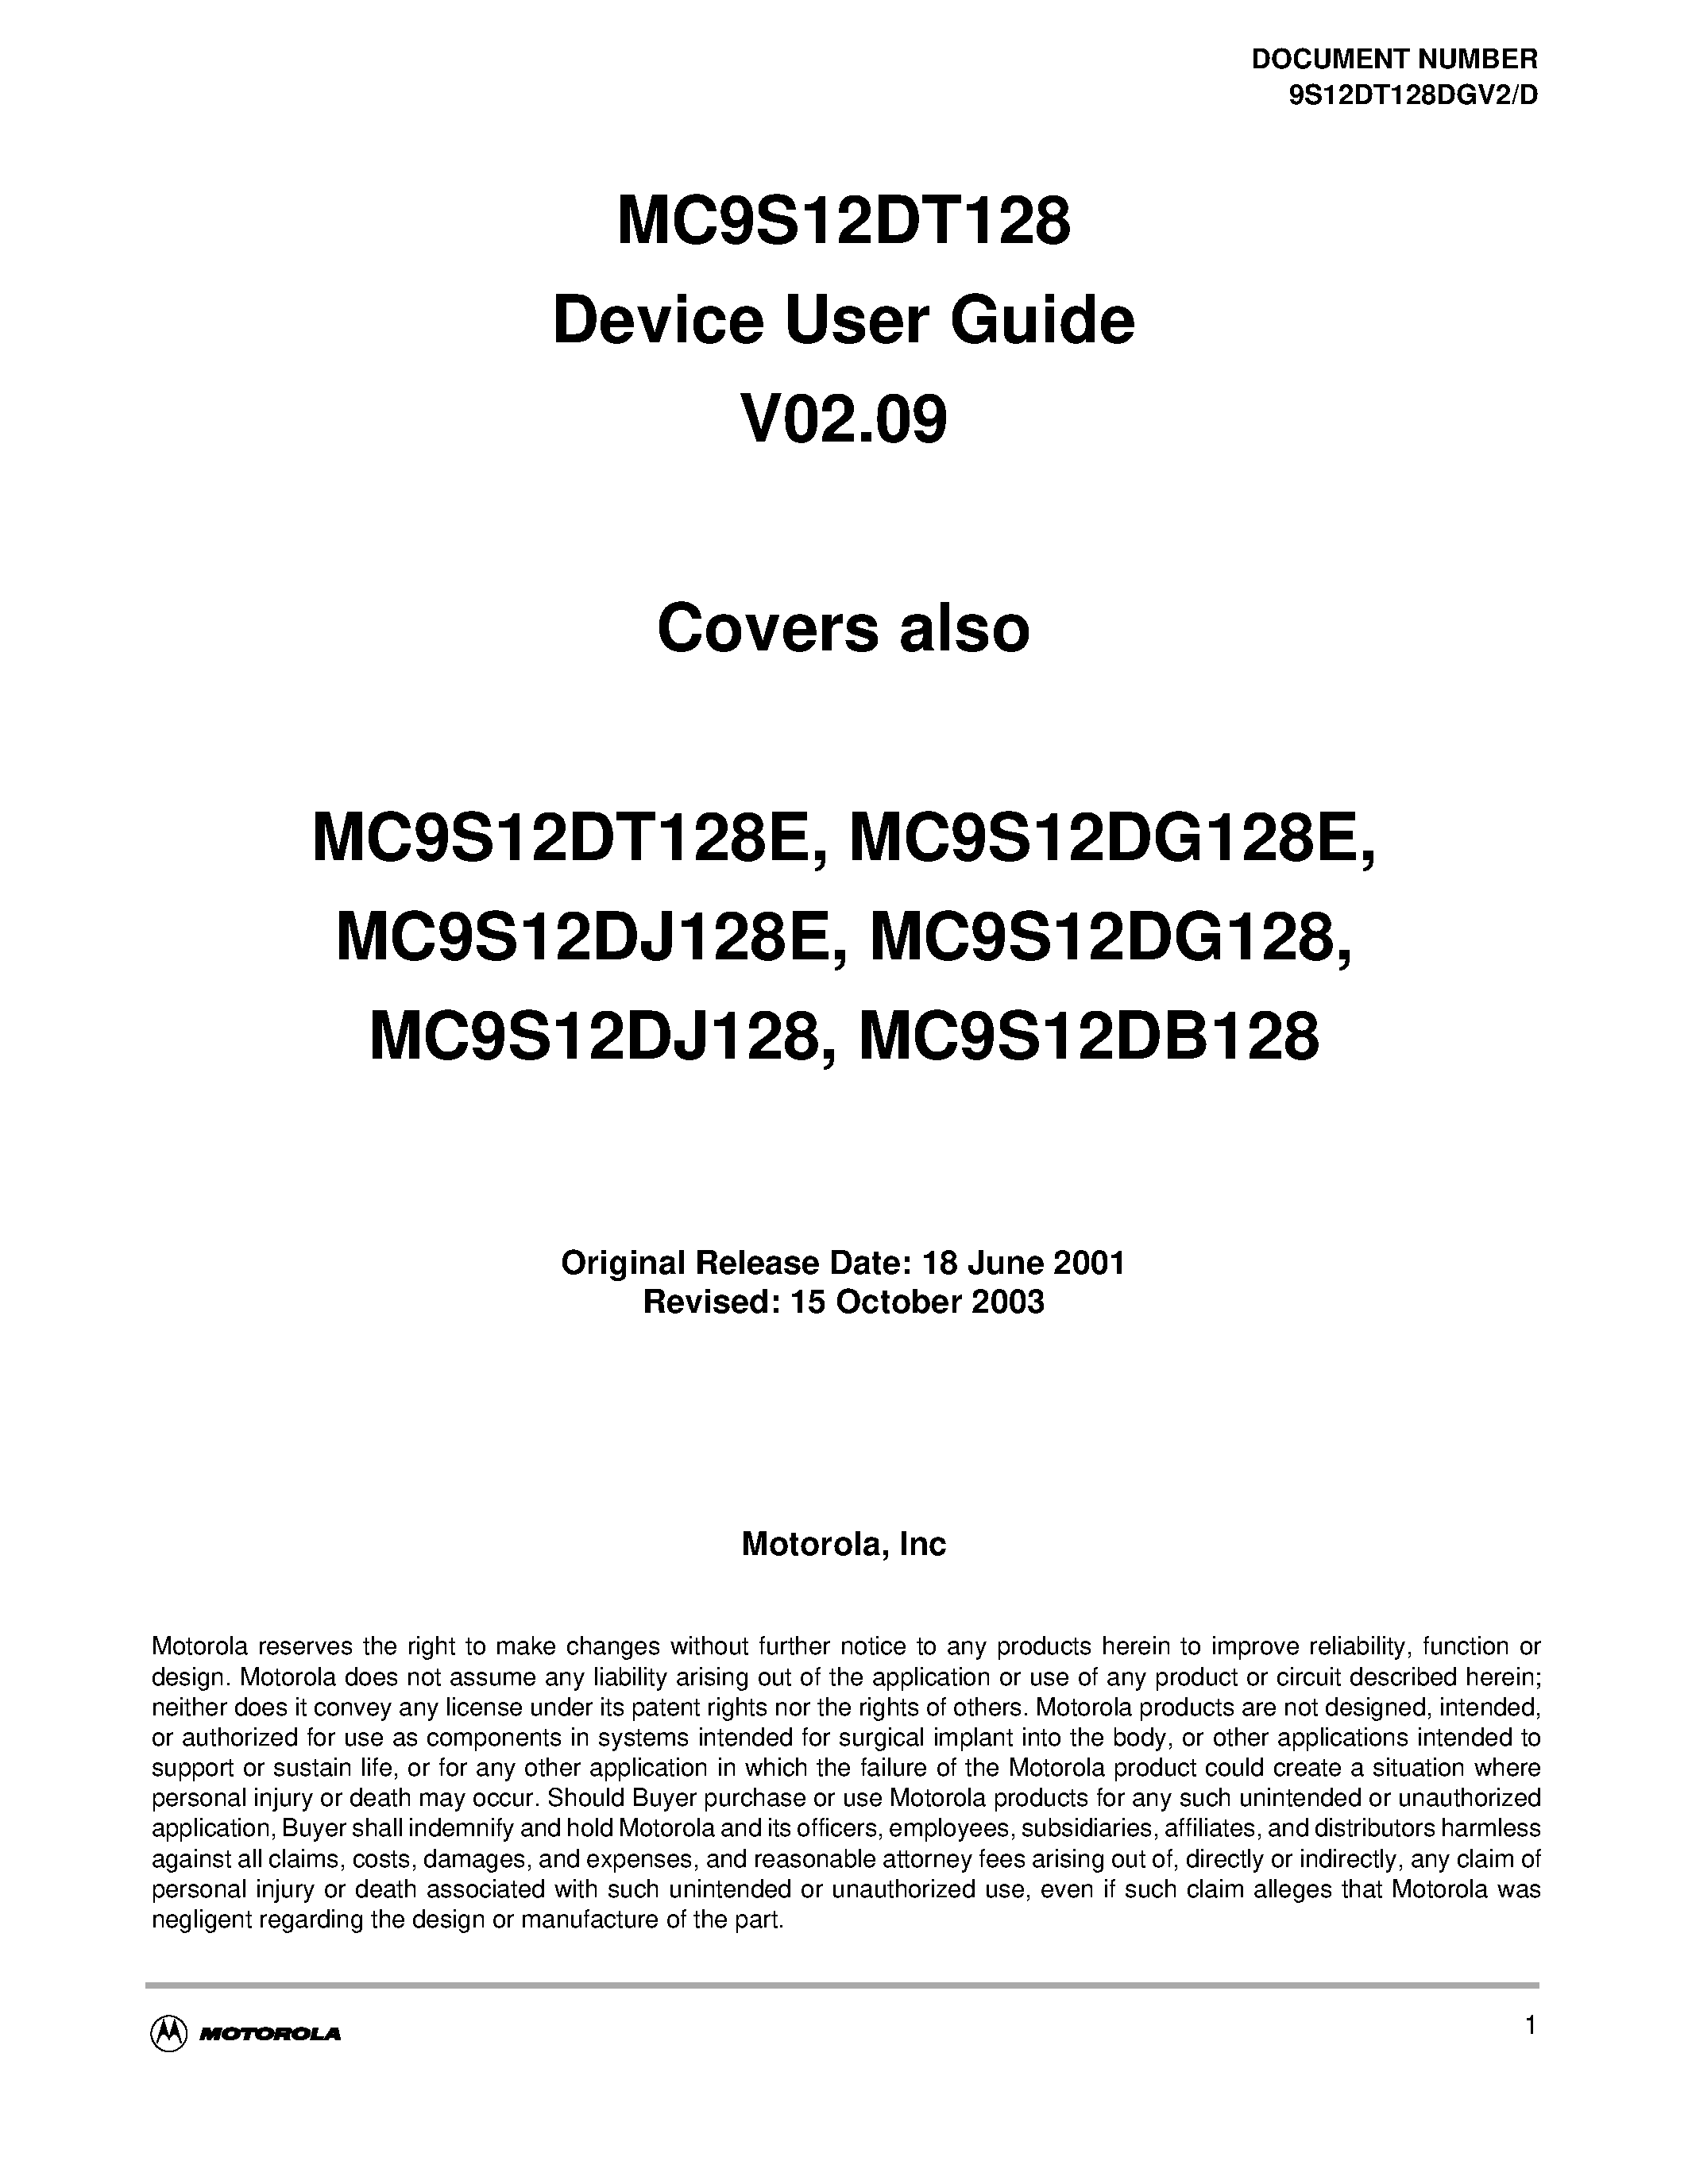 Datasheet S12MMCV4D - MC9S12DT128 Device User Guide V02.09 page 1